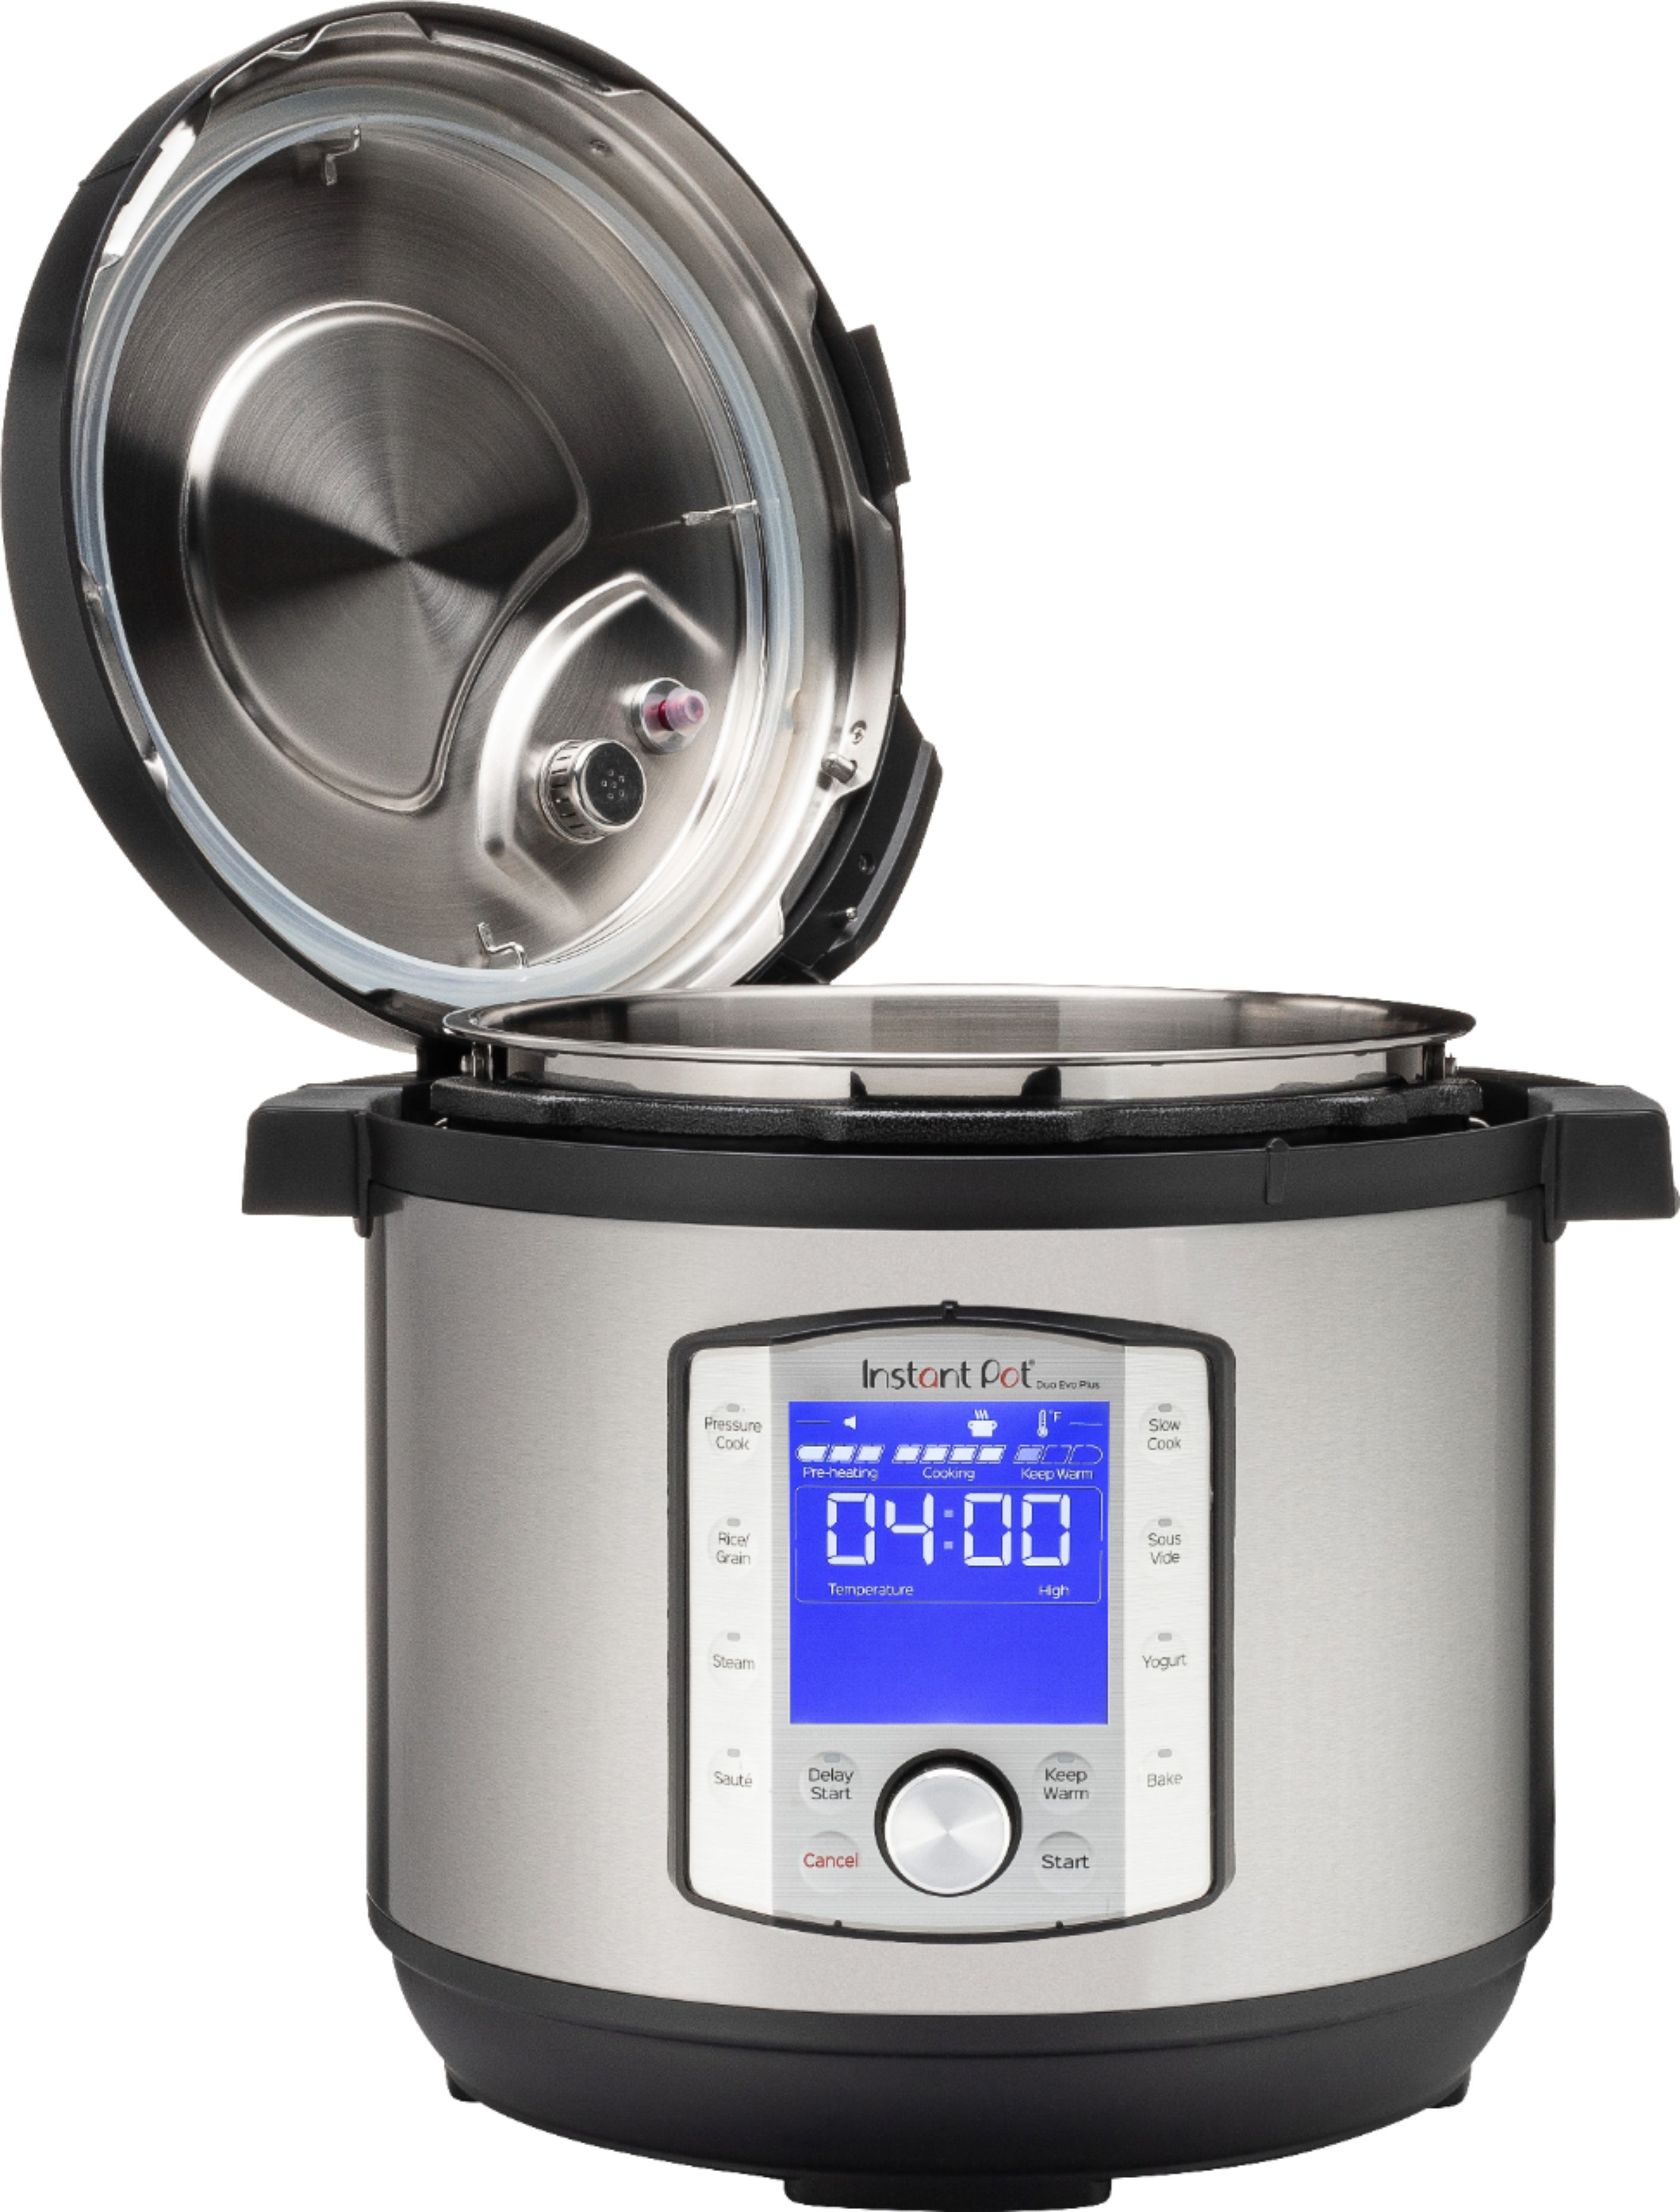 Instant Pot Duo Evo Plus Pressure Cooker, 8 Qt.